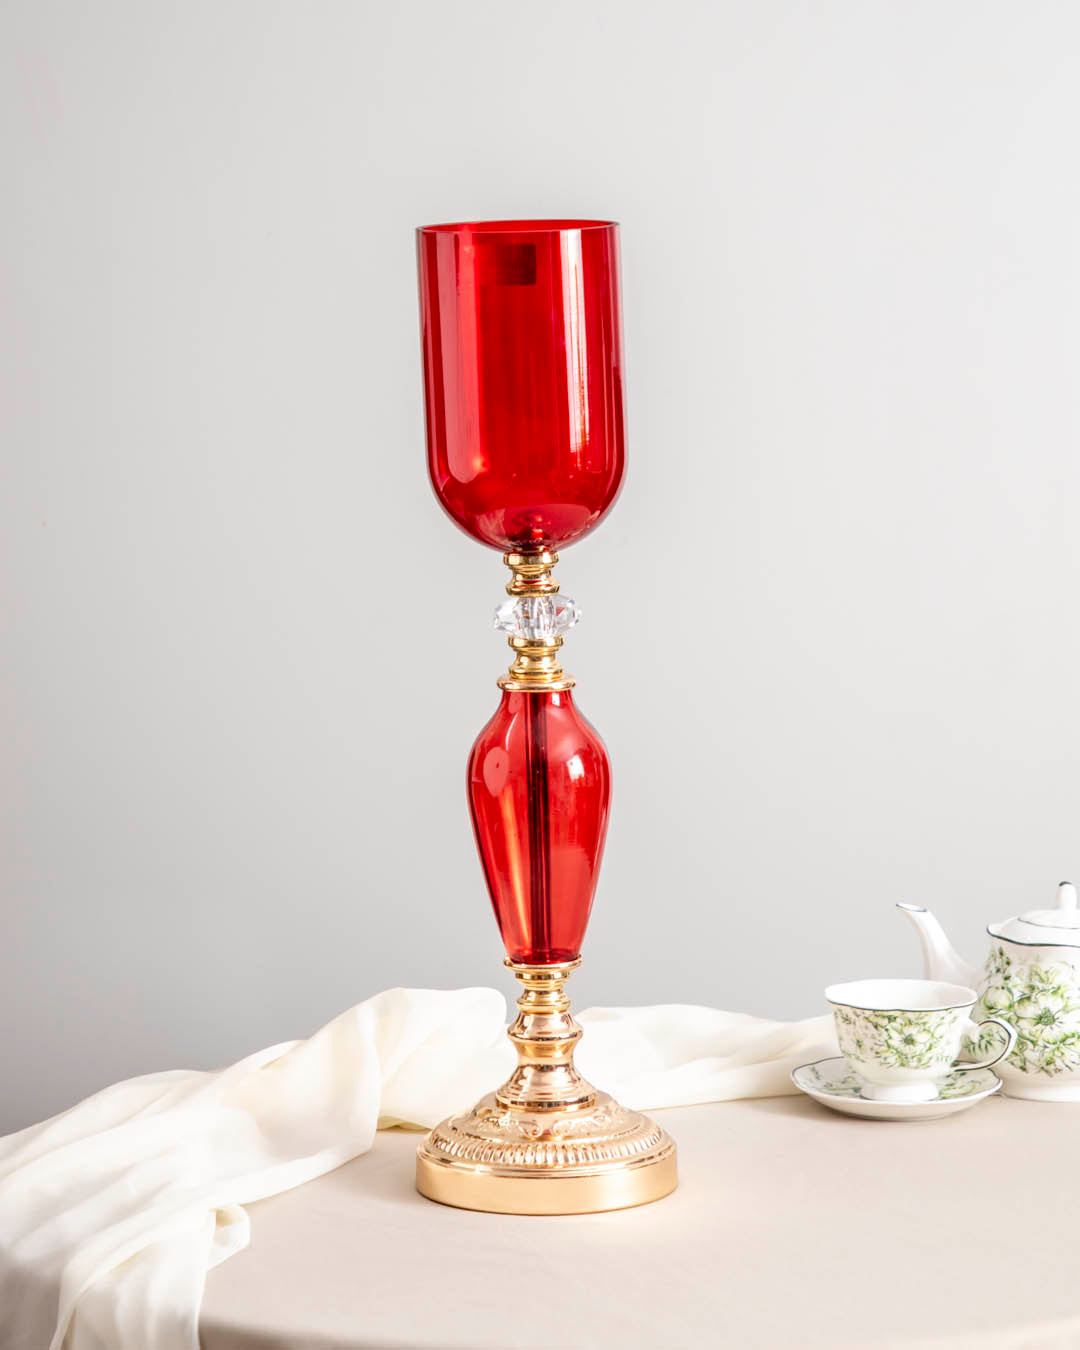 Alizarin Crimson Glass Table Top - Red